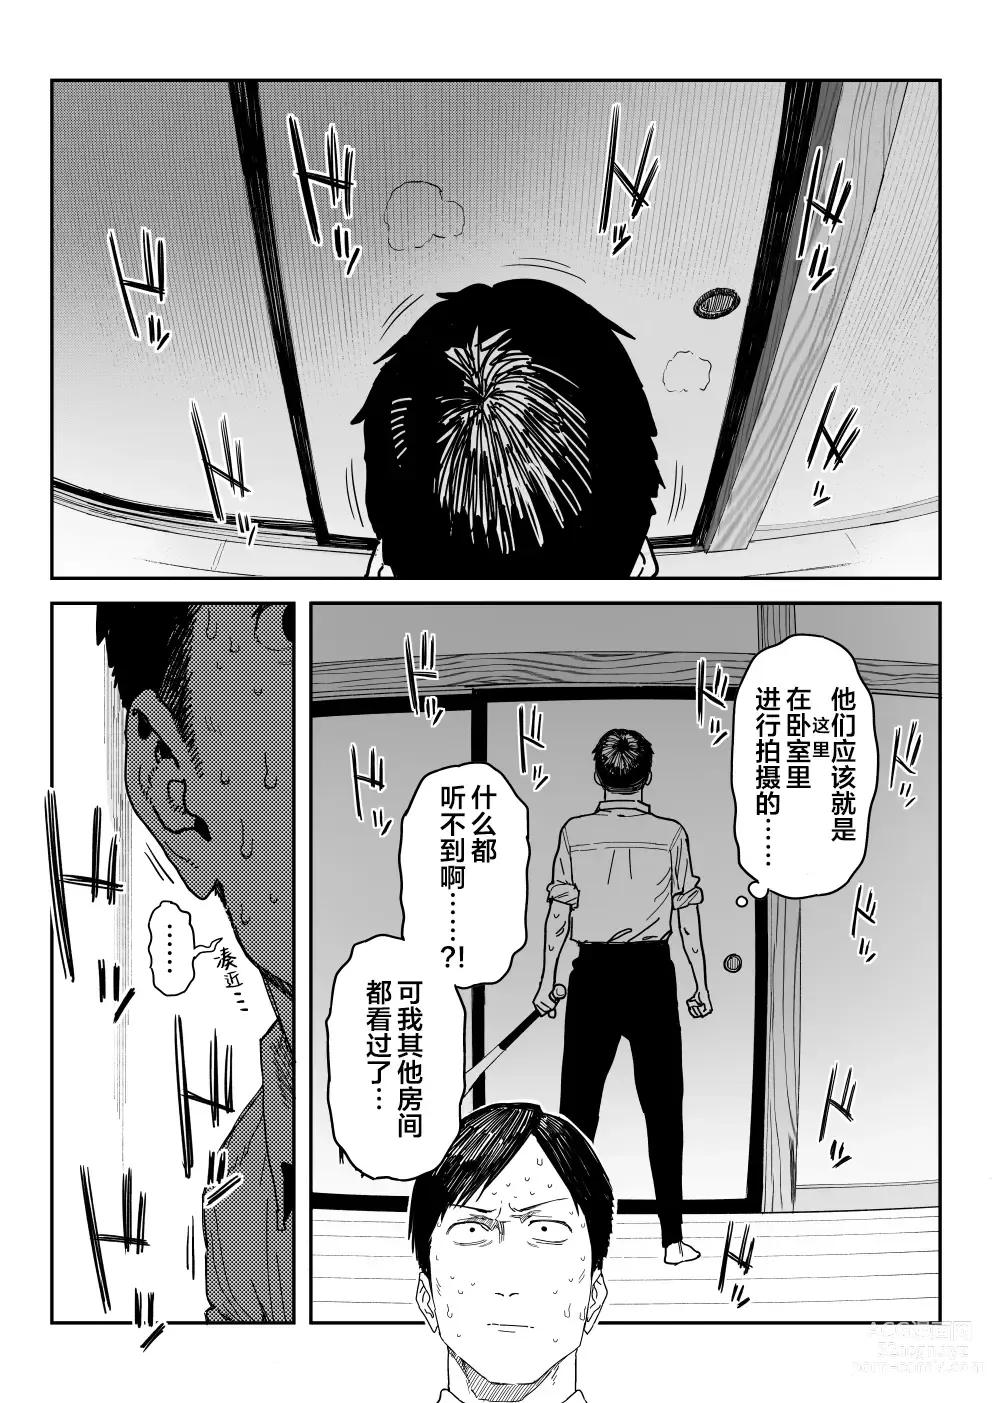 Page 64 of doujinshi 种崎佳织(39岁)代替女儿同人AV出道